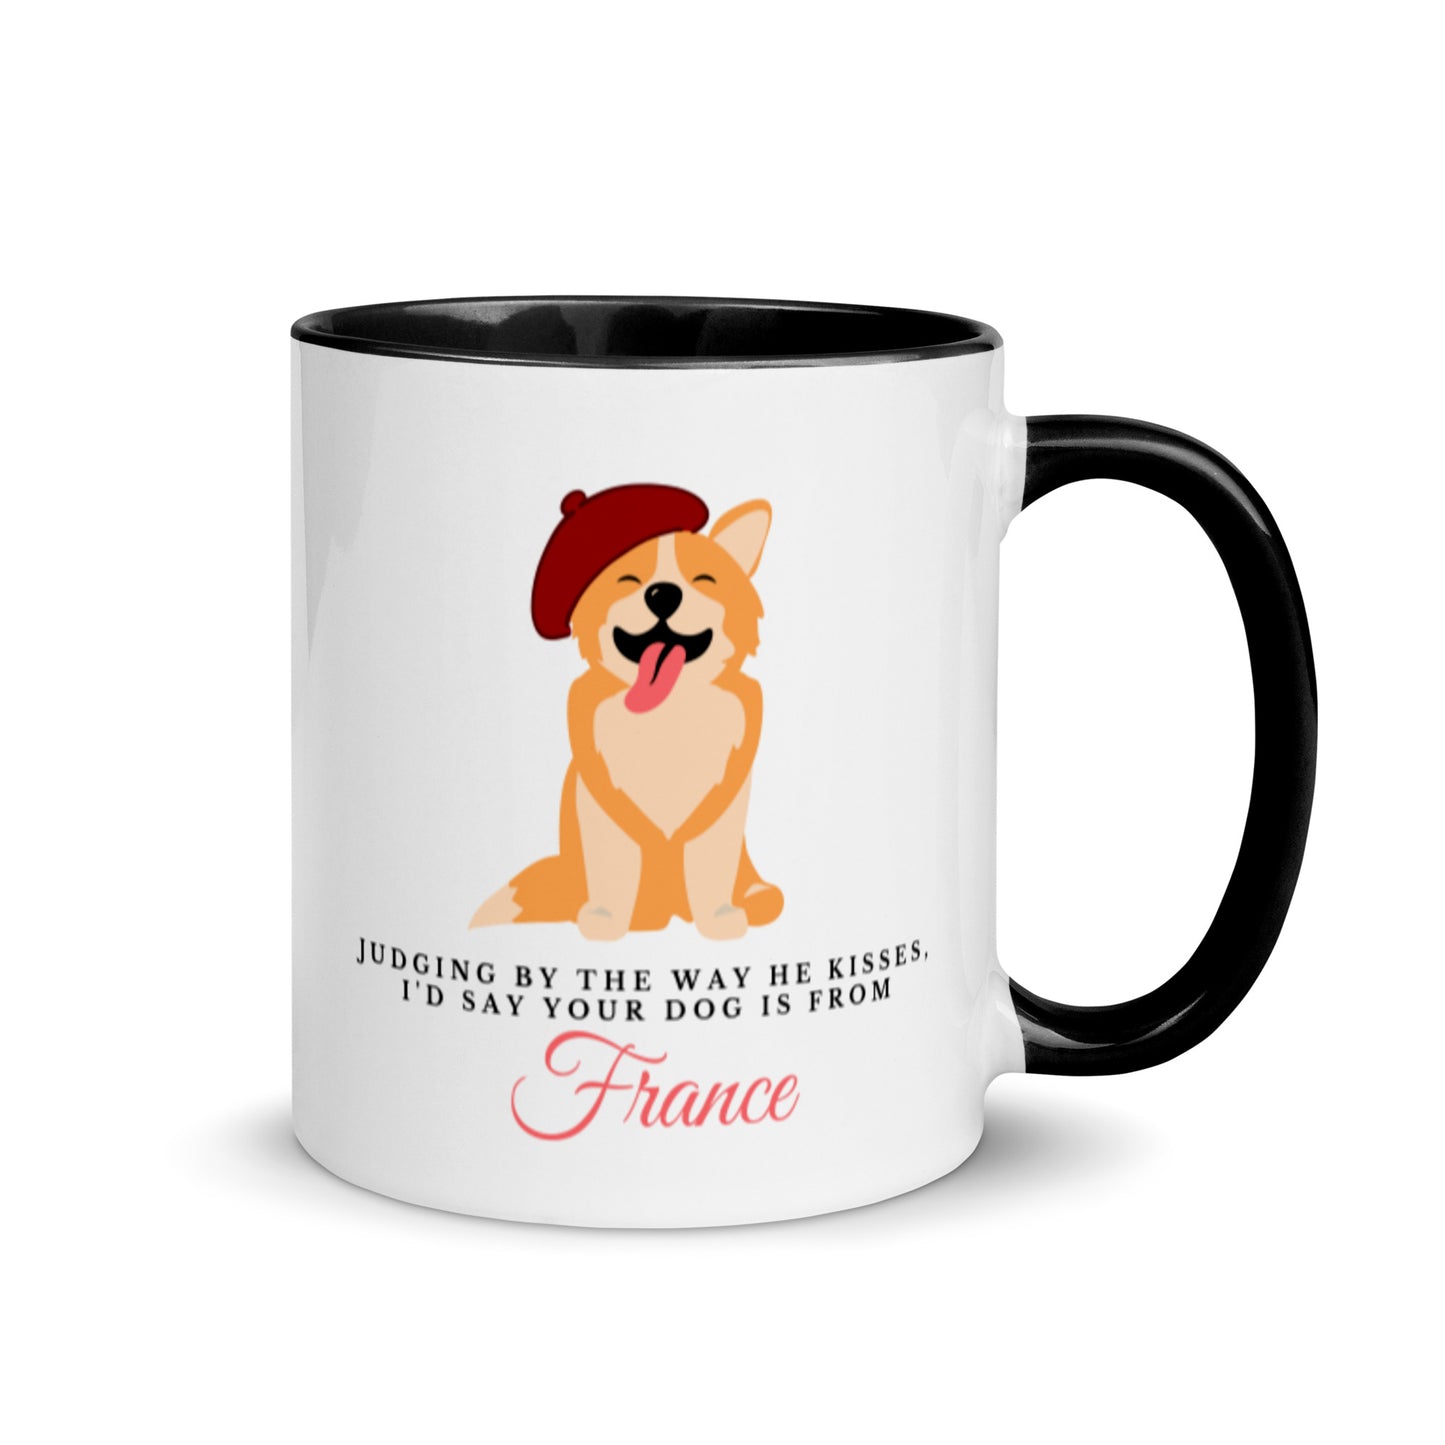 French Kisses Mug